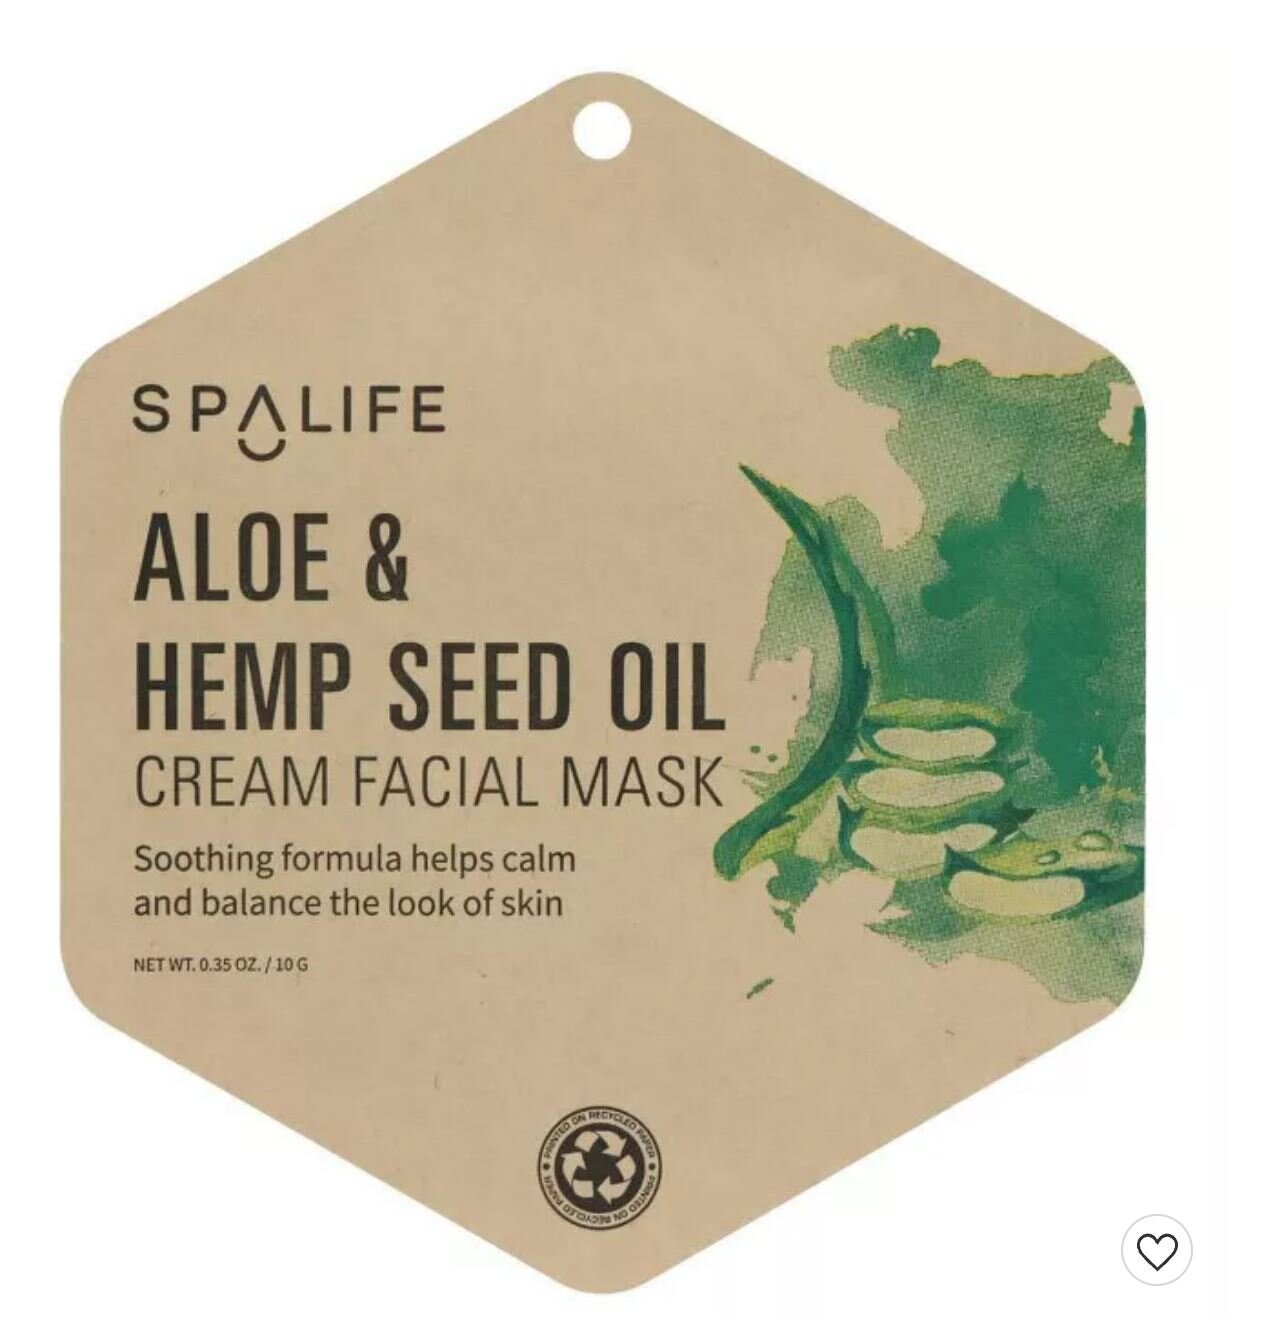 SpaLife Aloe & Hemp Seed Oil Cream Facial Mask.JPG